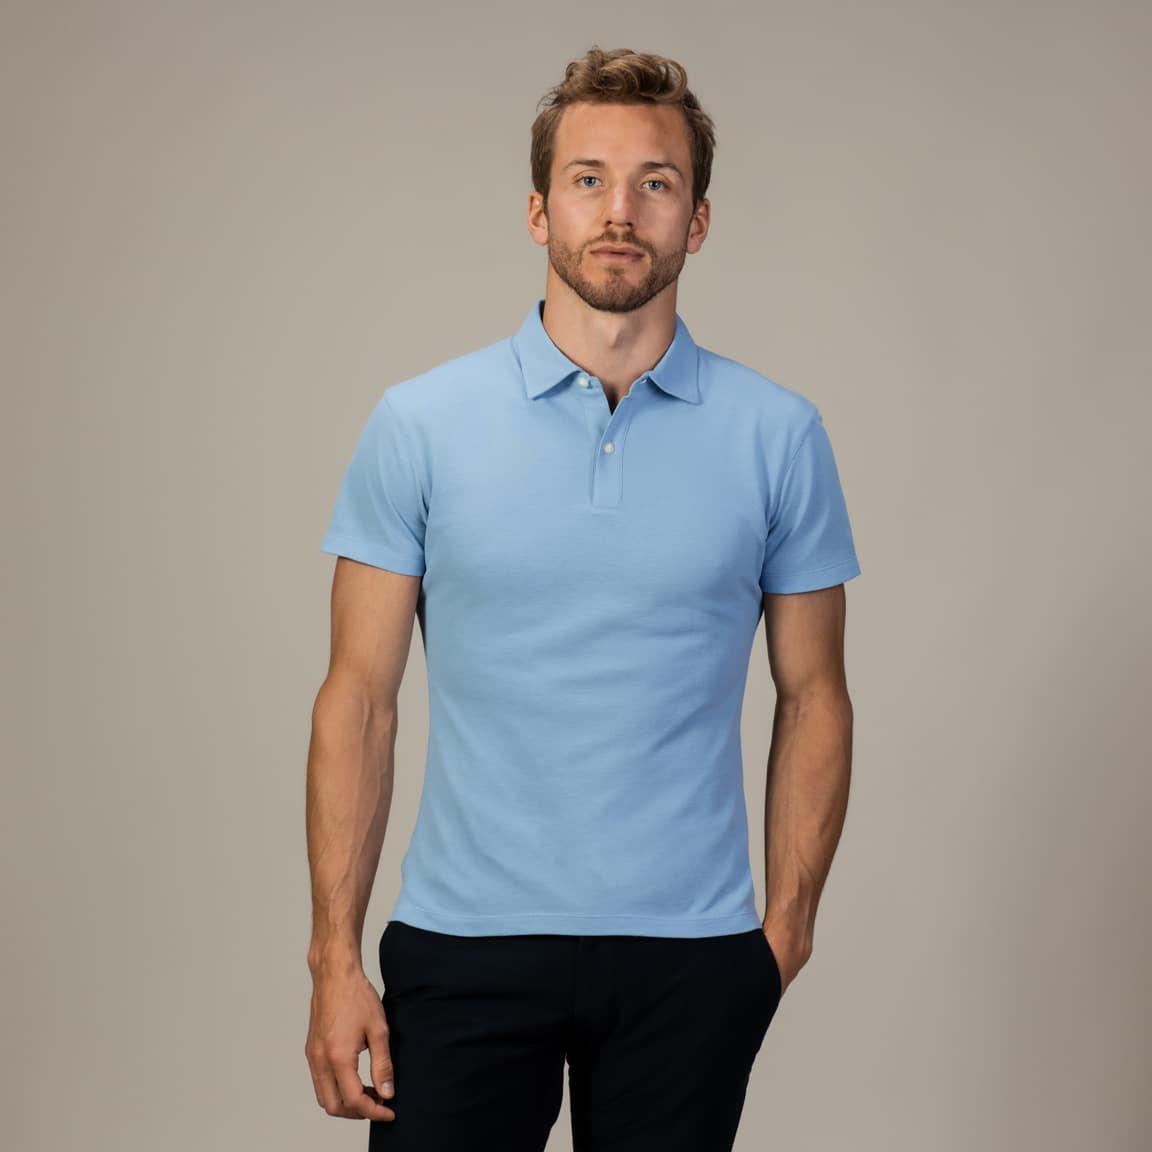 Tailor store sky blue polo shirt